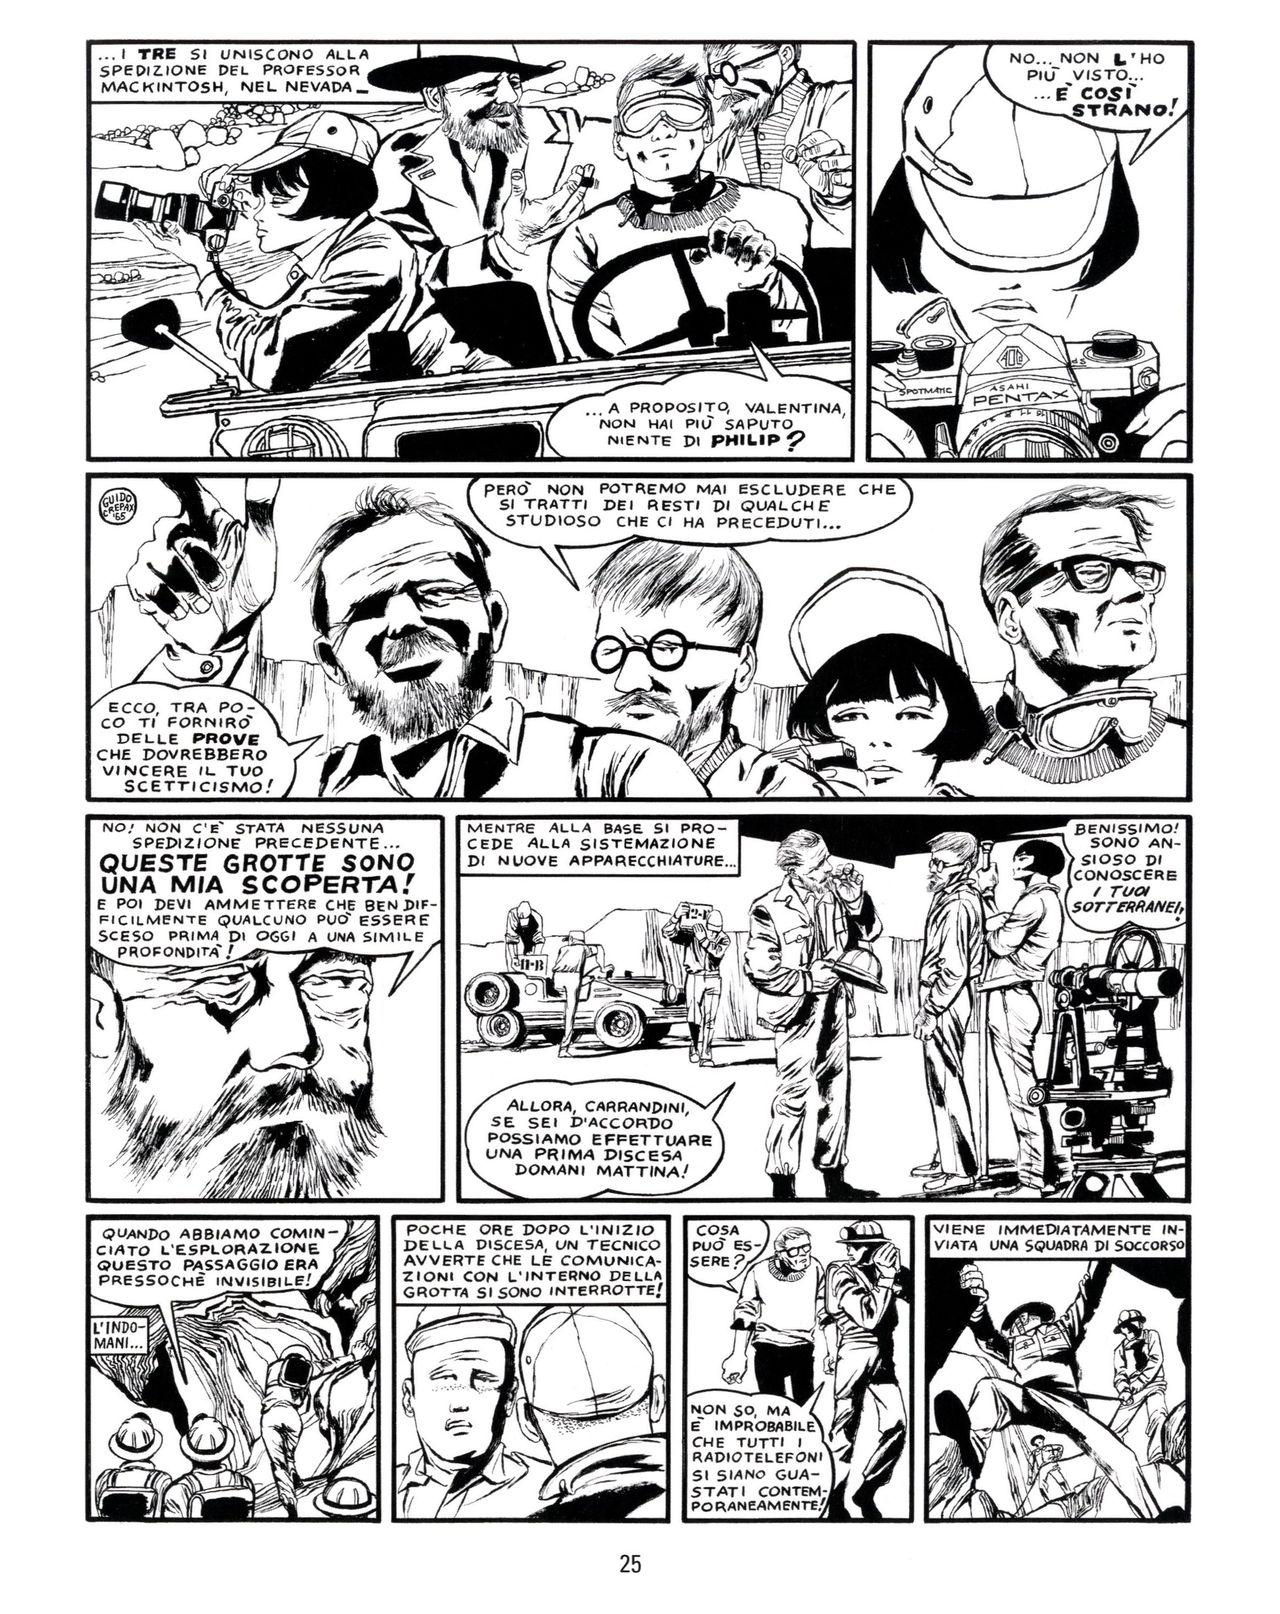 [Guido Crepax] Erotica Fumetti #25 : L'ascesa dei sotterranei : I cavalieri ciechi [Italian] 26